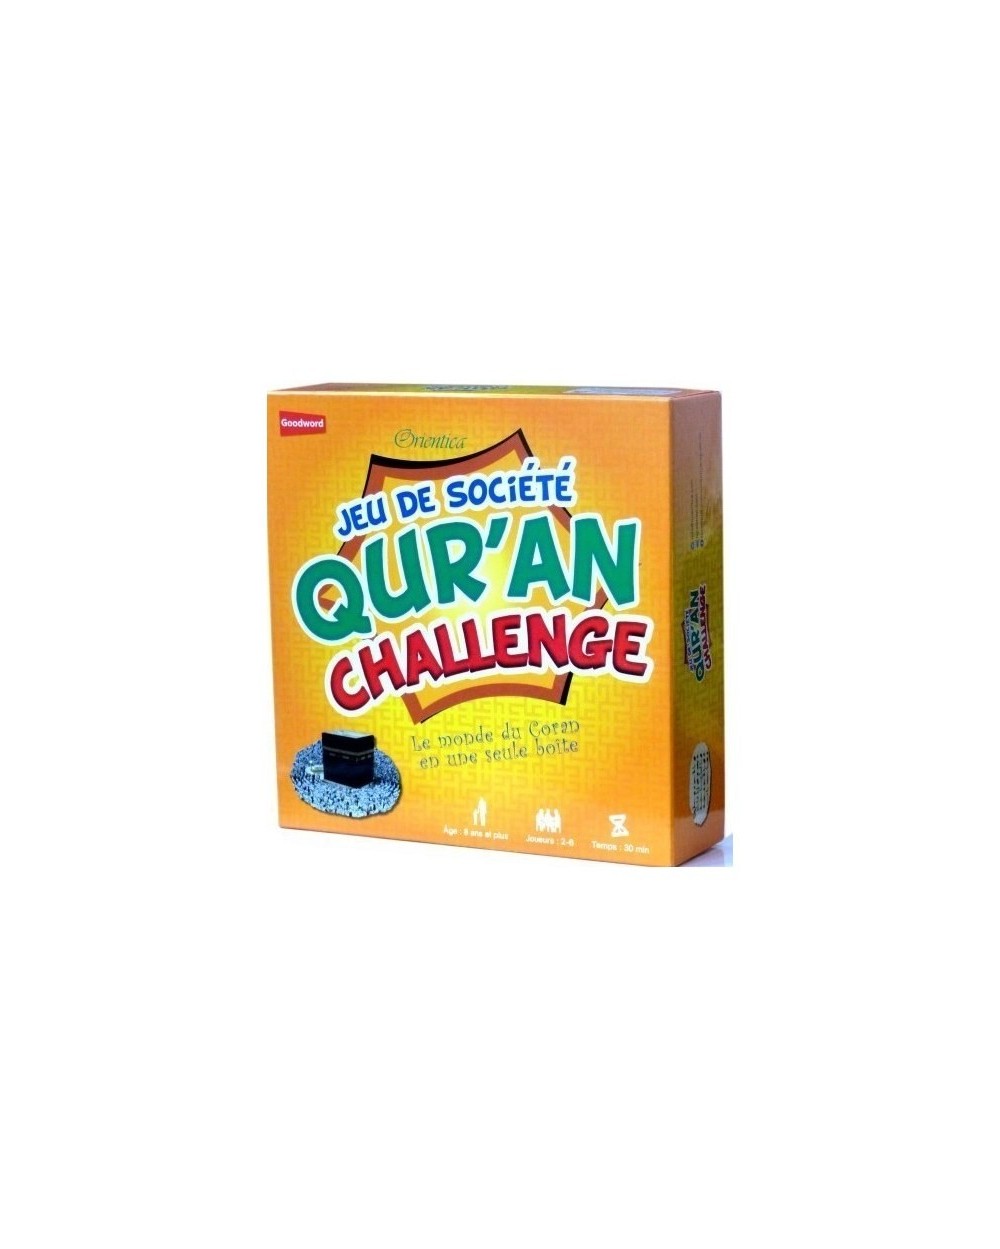 Quran challenge board game